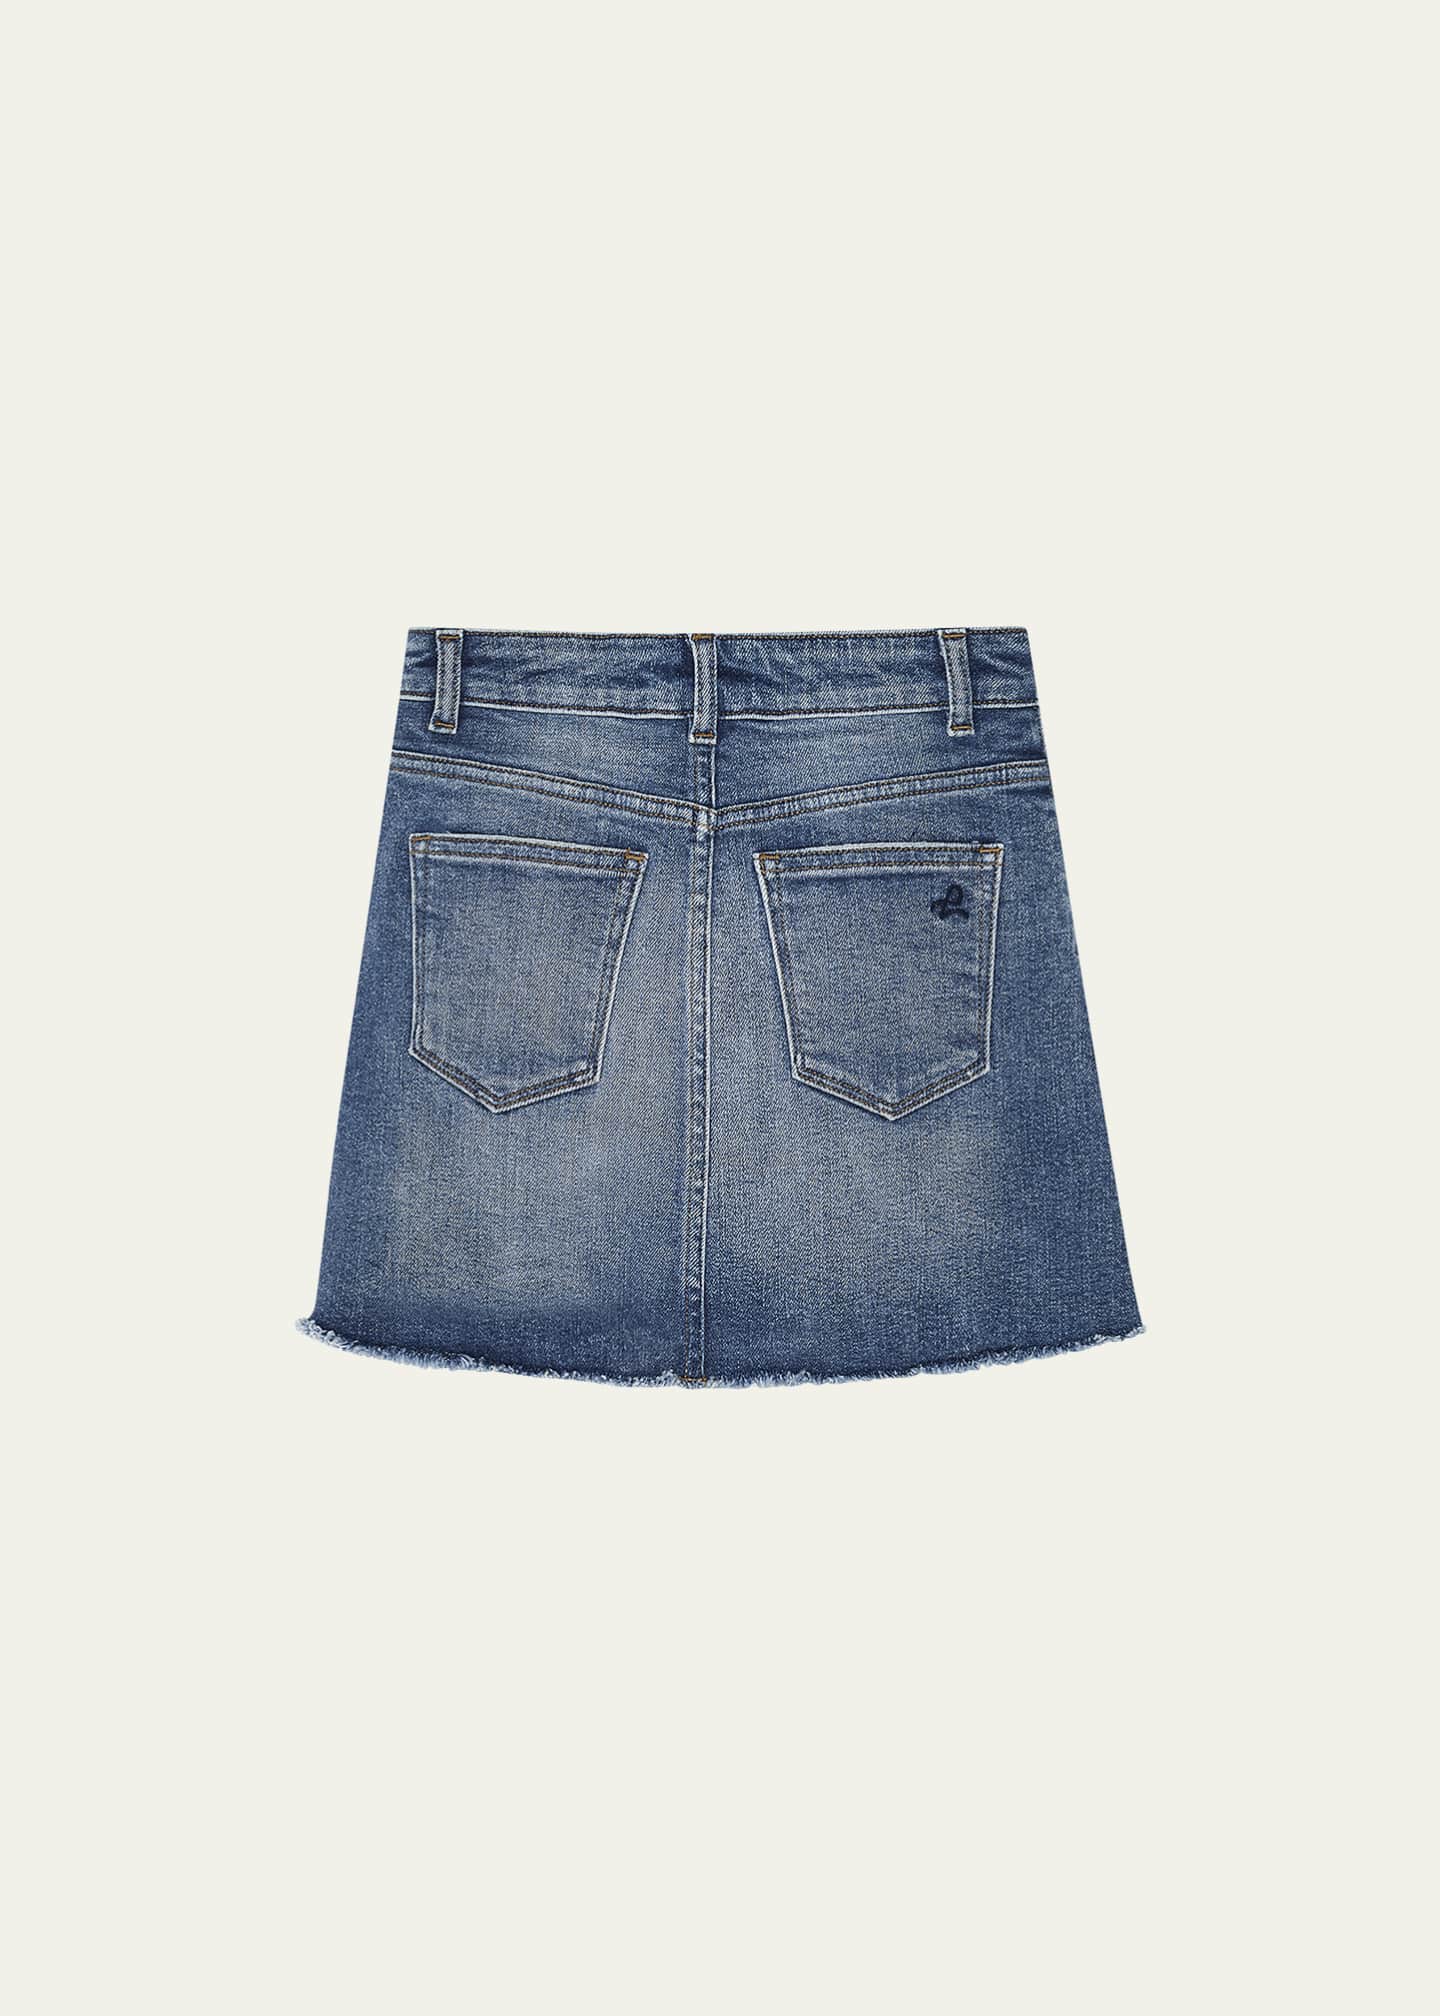 DL1961 Girls' Jenny Raw-Edge Denim Mini Skirt, Size 7-16 Image 2 of 2